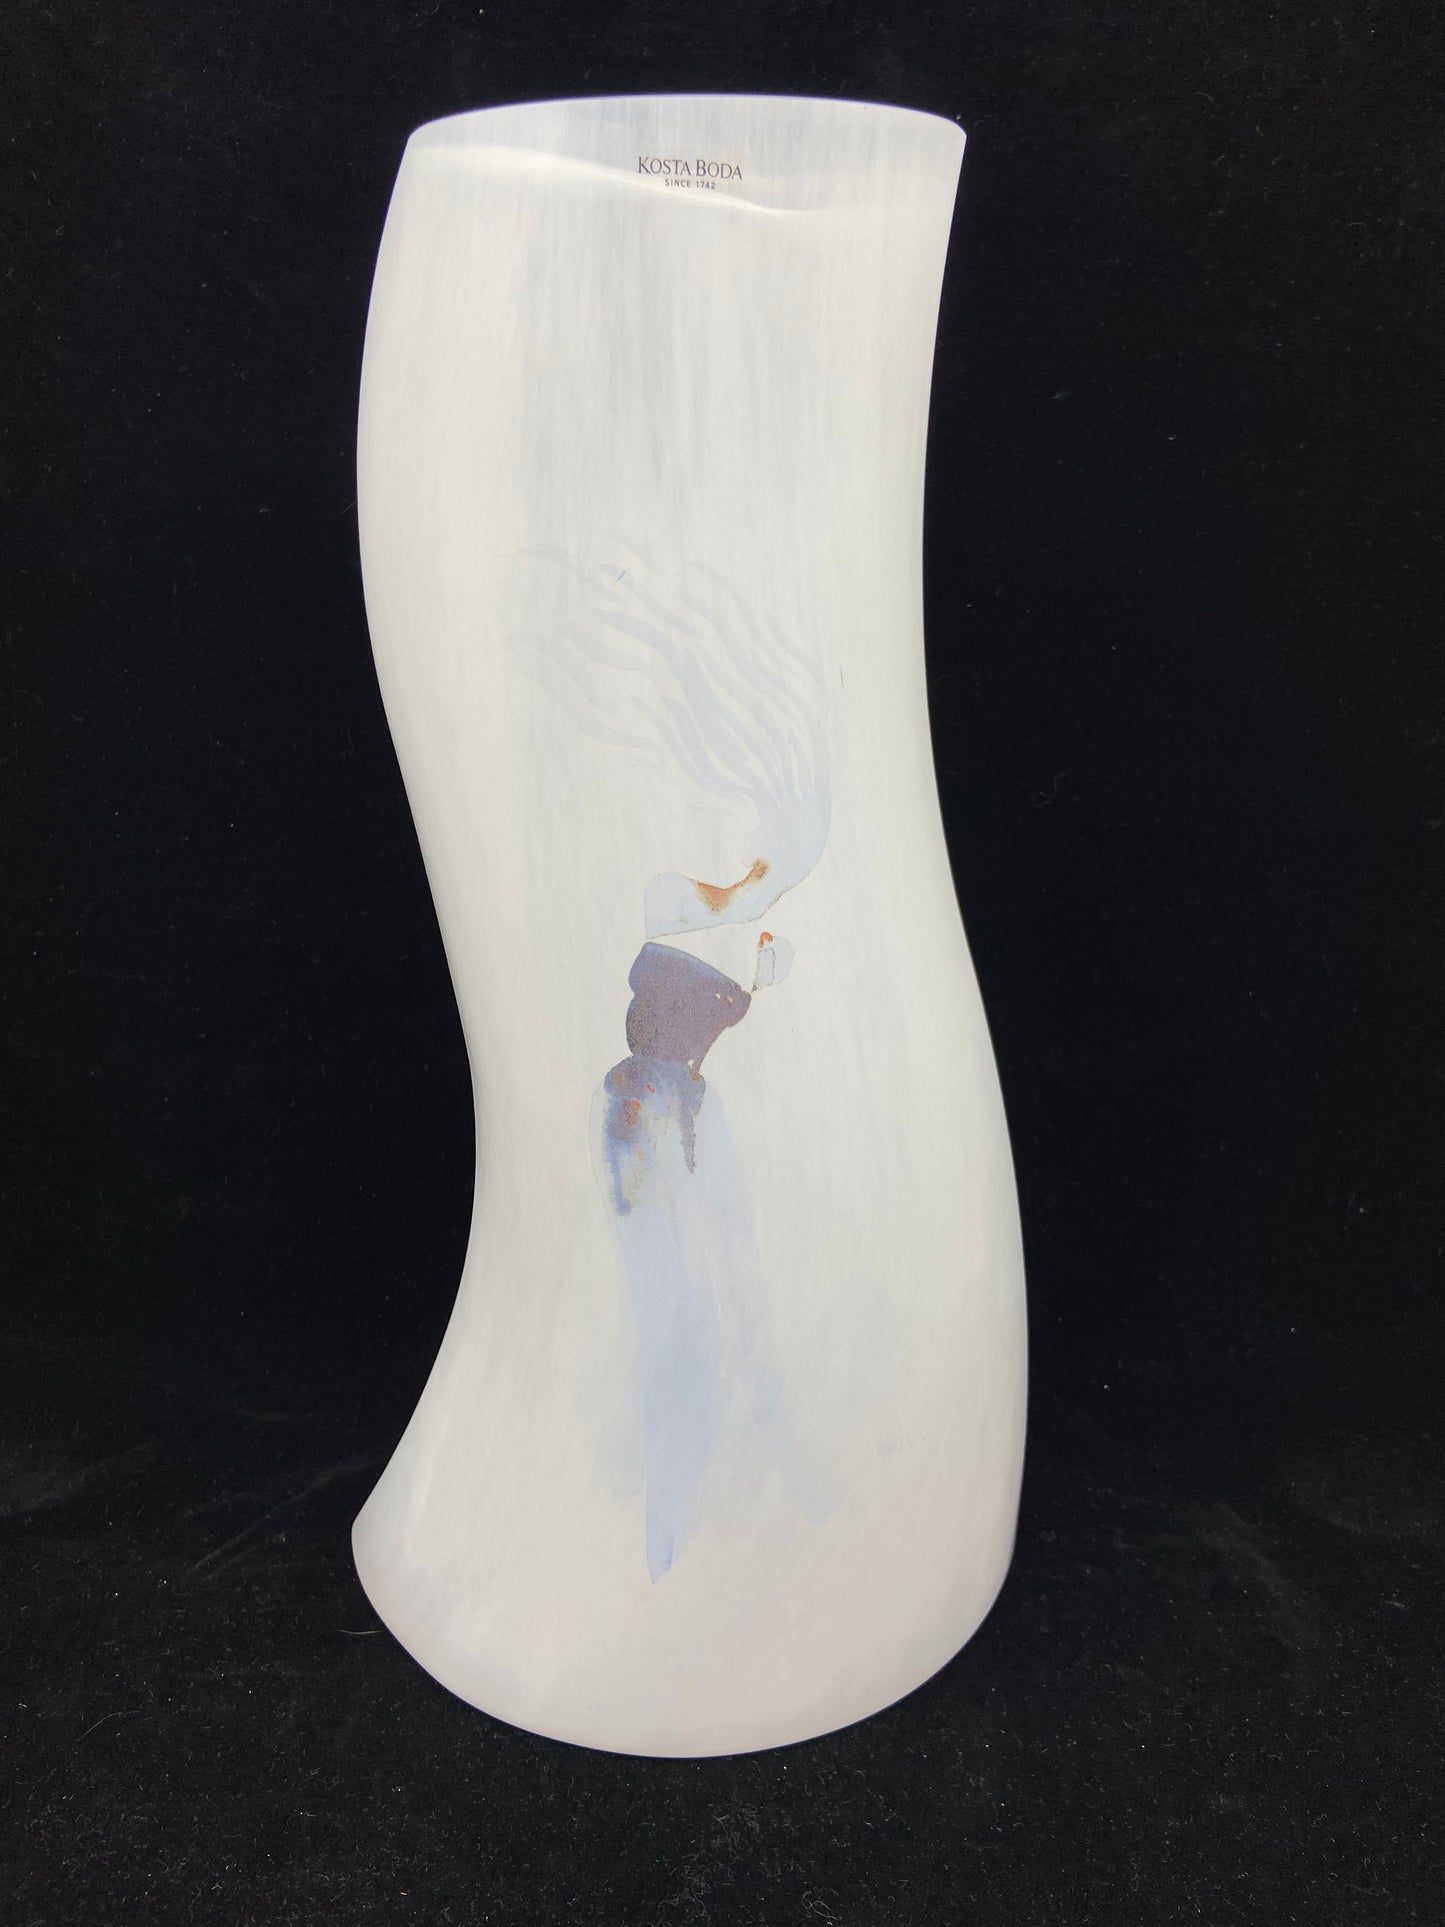 Kosta Boda Kell Engman Catwalk Vase (BYEN16)